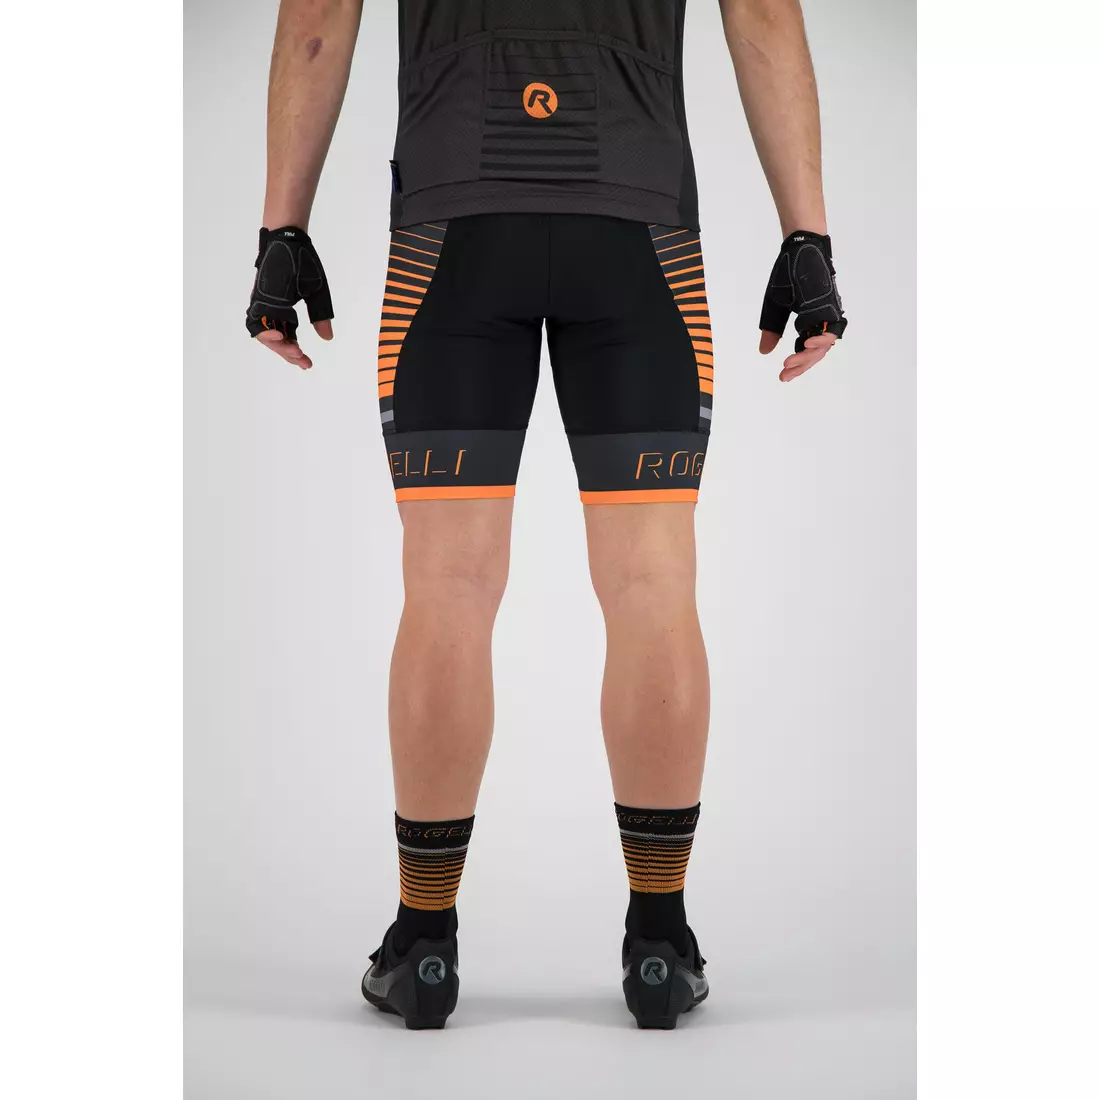 Rogelli HERI 002.239 Men Bike Bib shorts Black/Gray/Orange